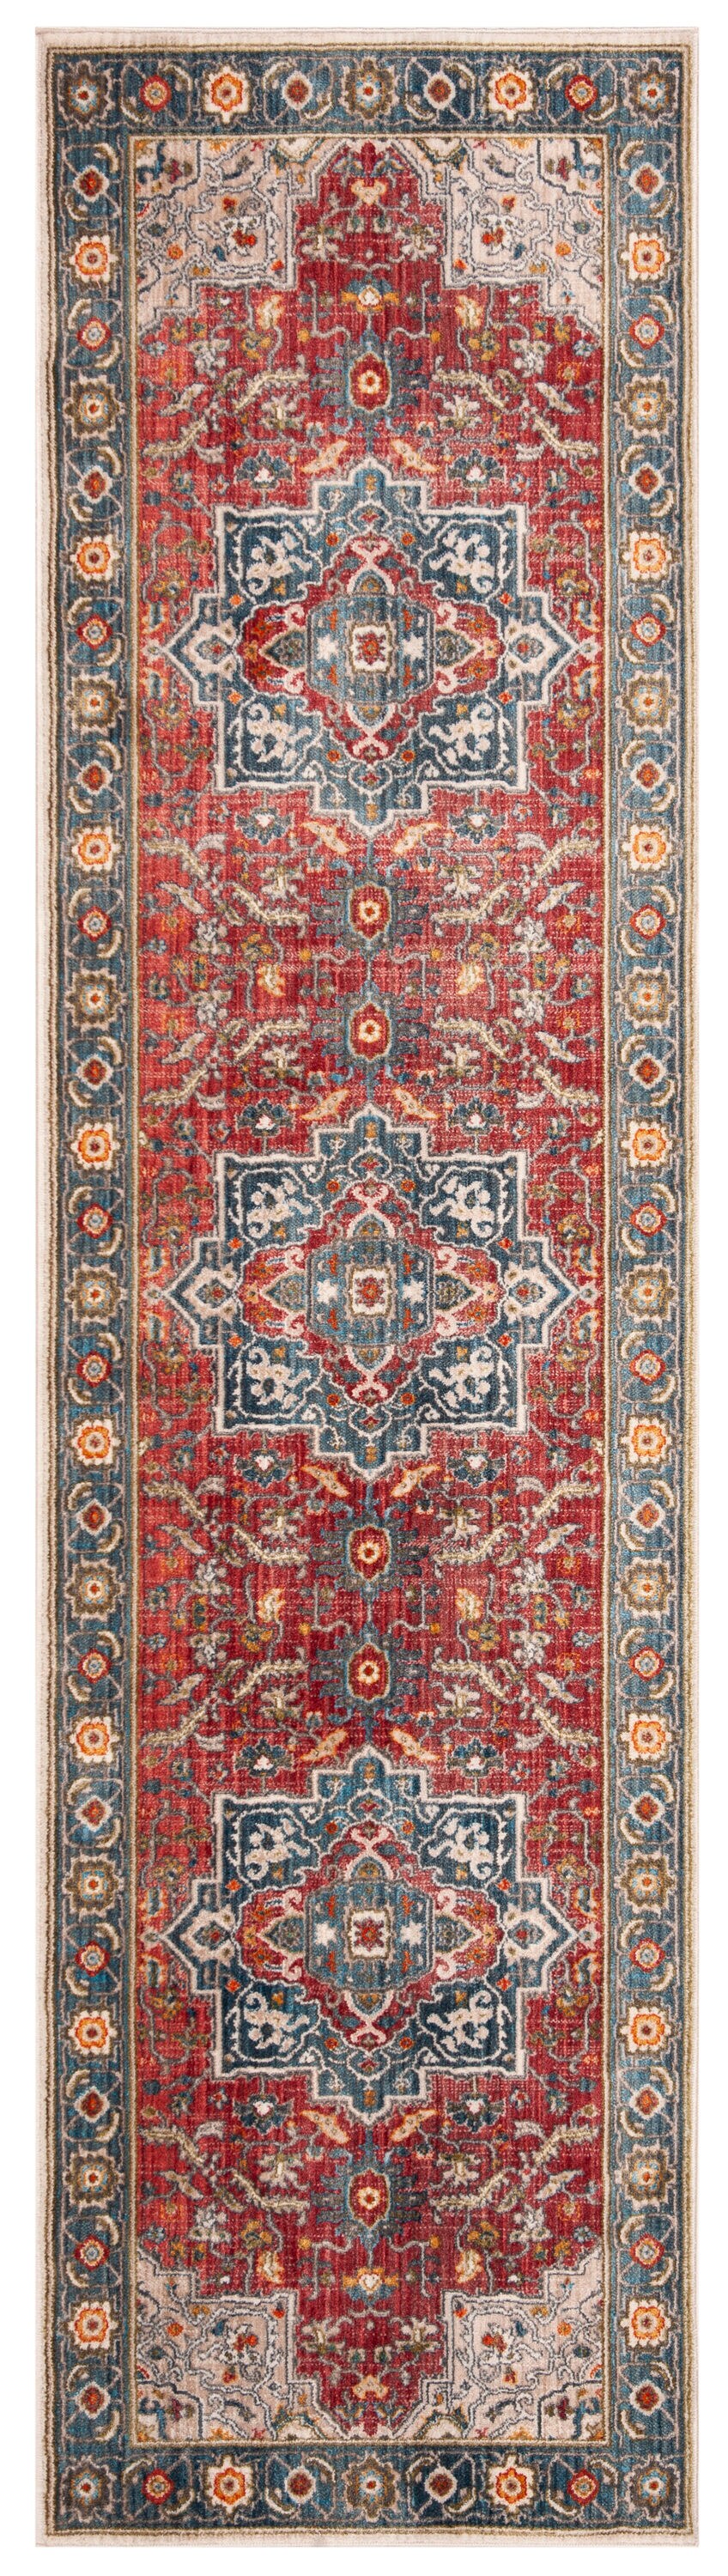 Safavieh Vintage Persian Lepul 2 x 8 Red/Blue Indoor Distressed